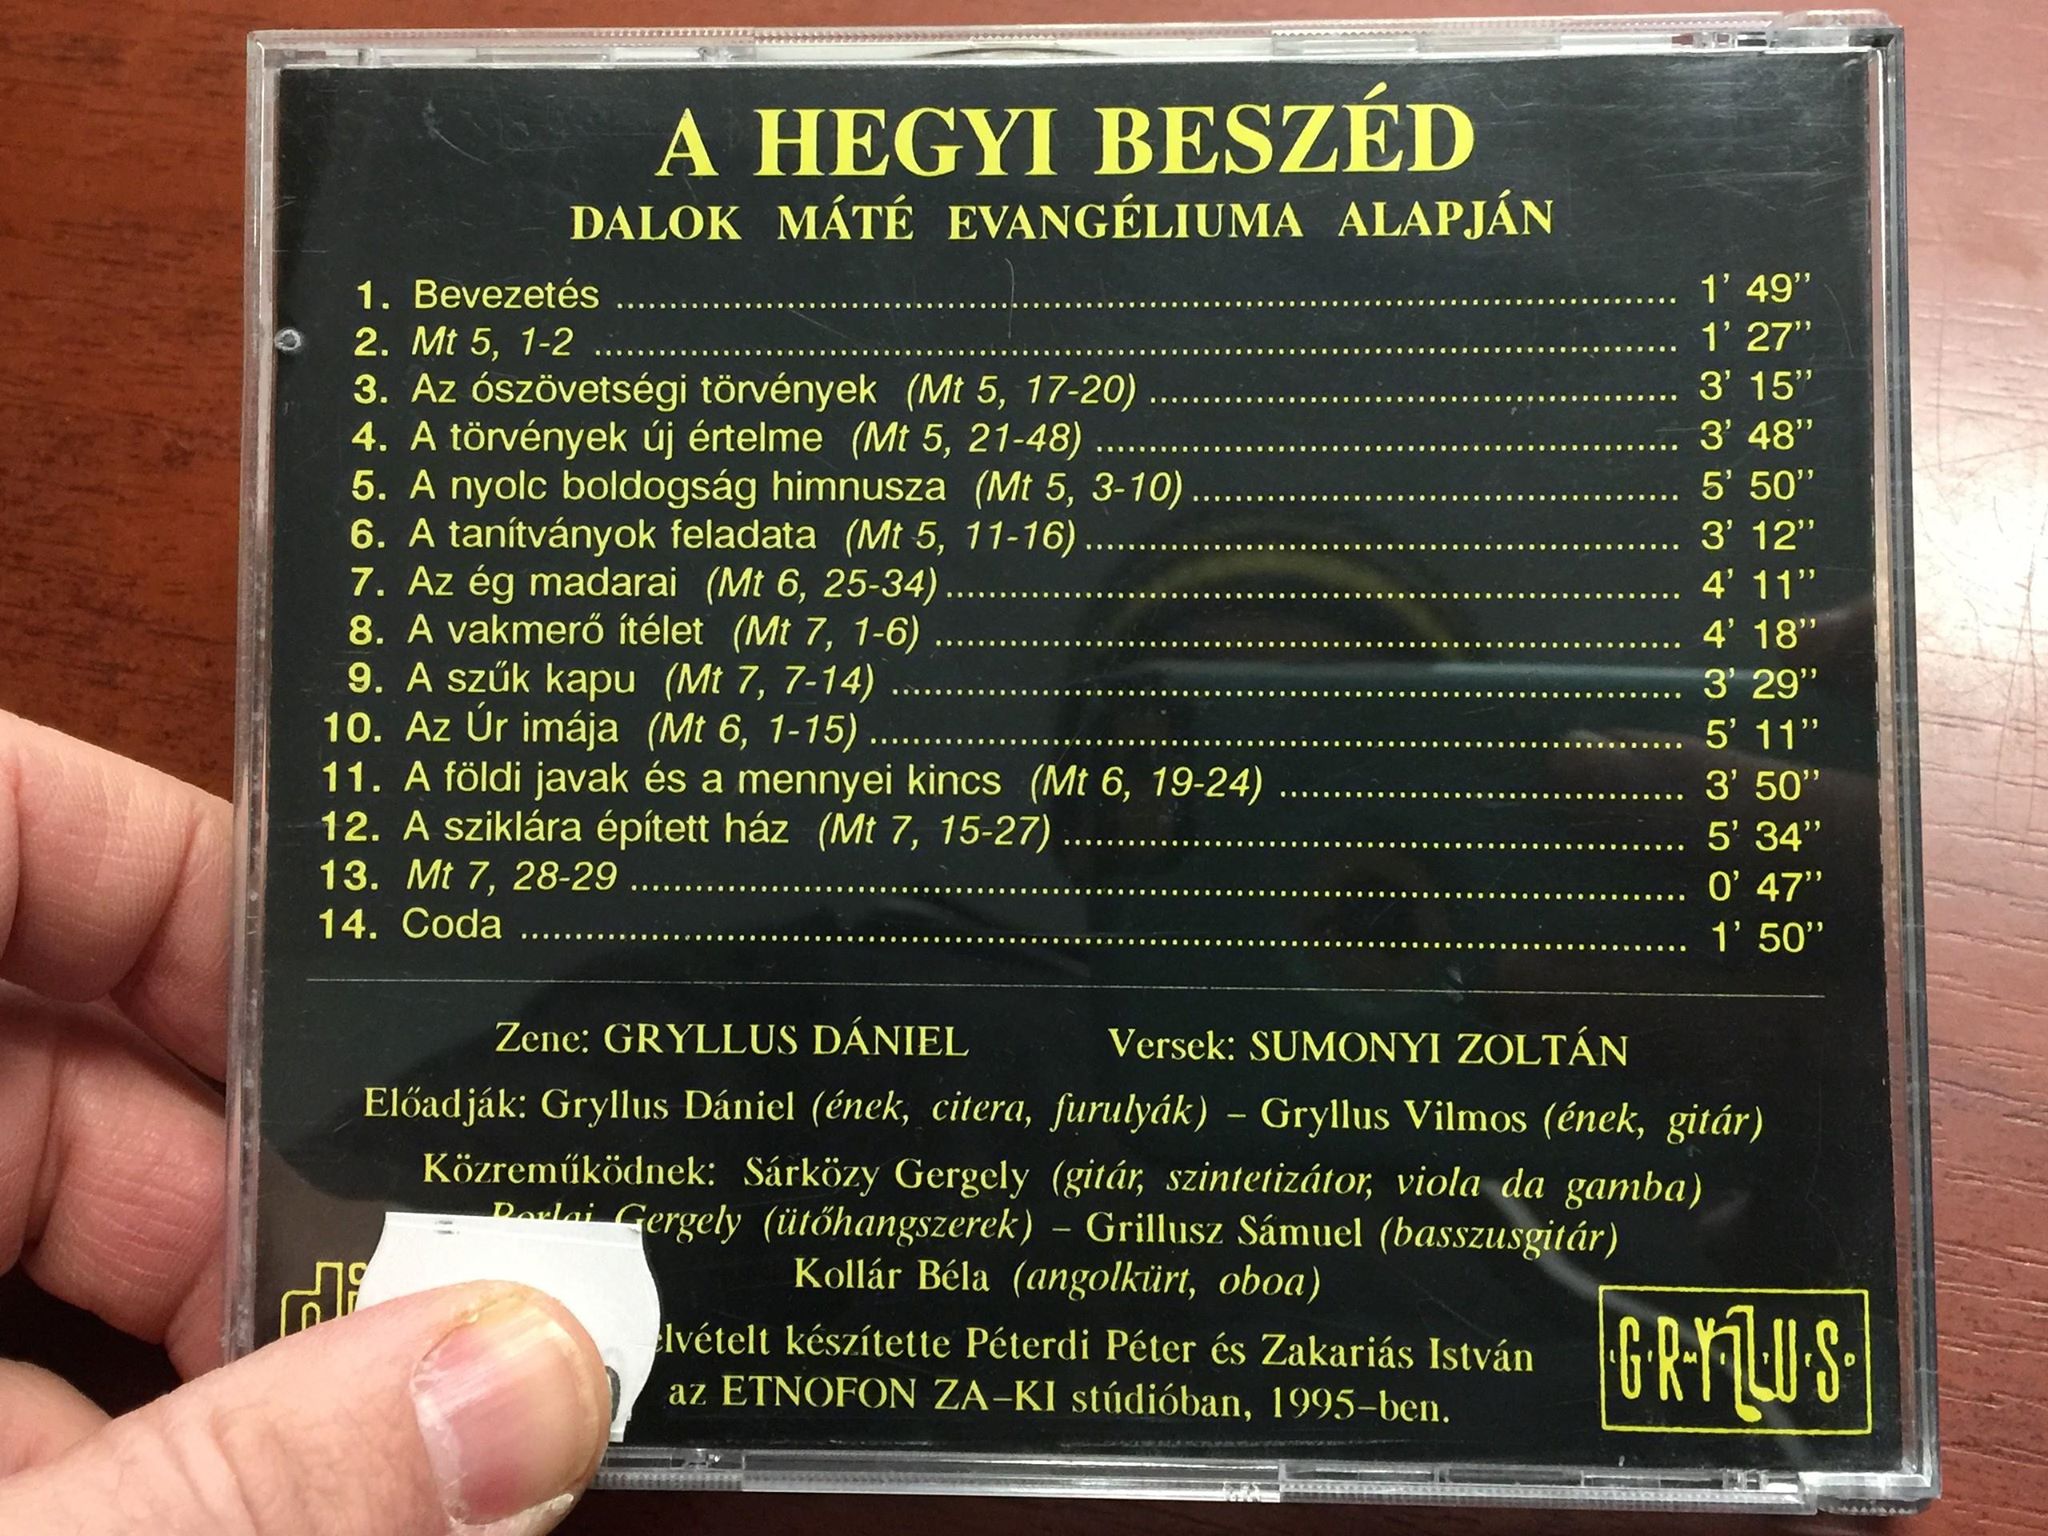 a-hegyi-besz-d-gryllus-d-niel-sumonyi-zolt-n-dalok-m-t-evang-liuma-alapj-n-the-sermon-on-the-mount-songs-based-on-the-gospel-of-matthew-hungarian-cd-1995-2-.jpg